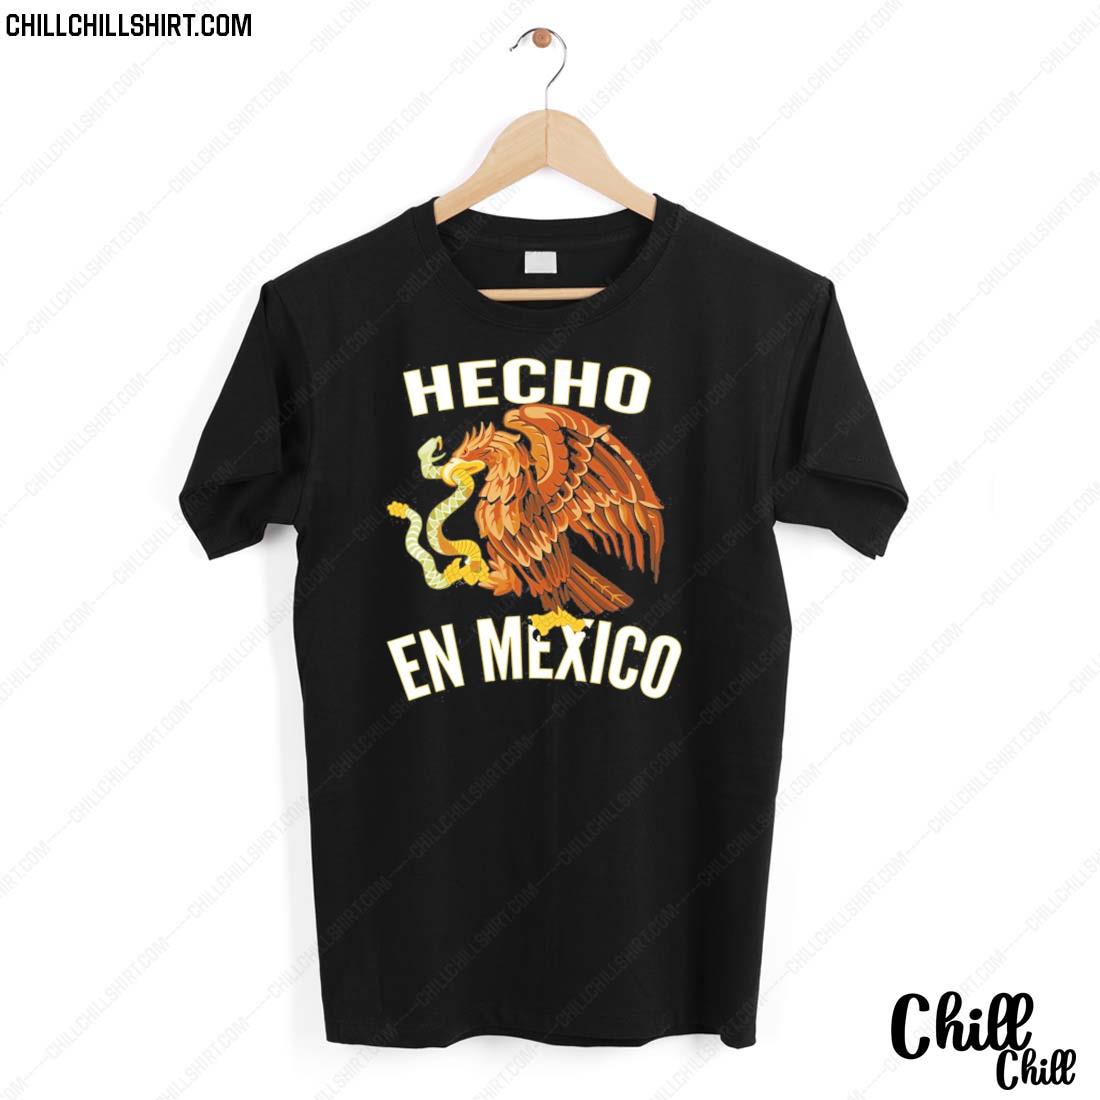 Chillchillshirt - Official mexican Gift Hecho En Mexico Shirt - Myfrogtee